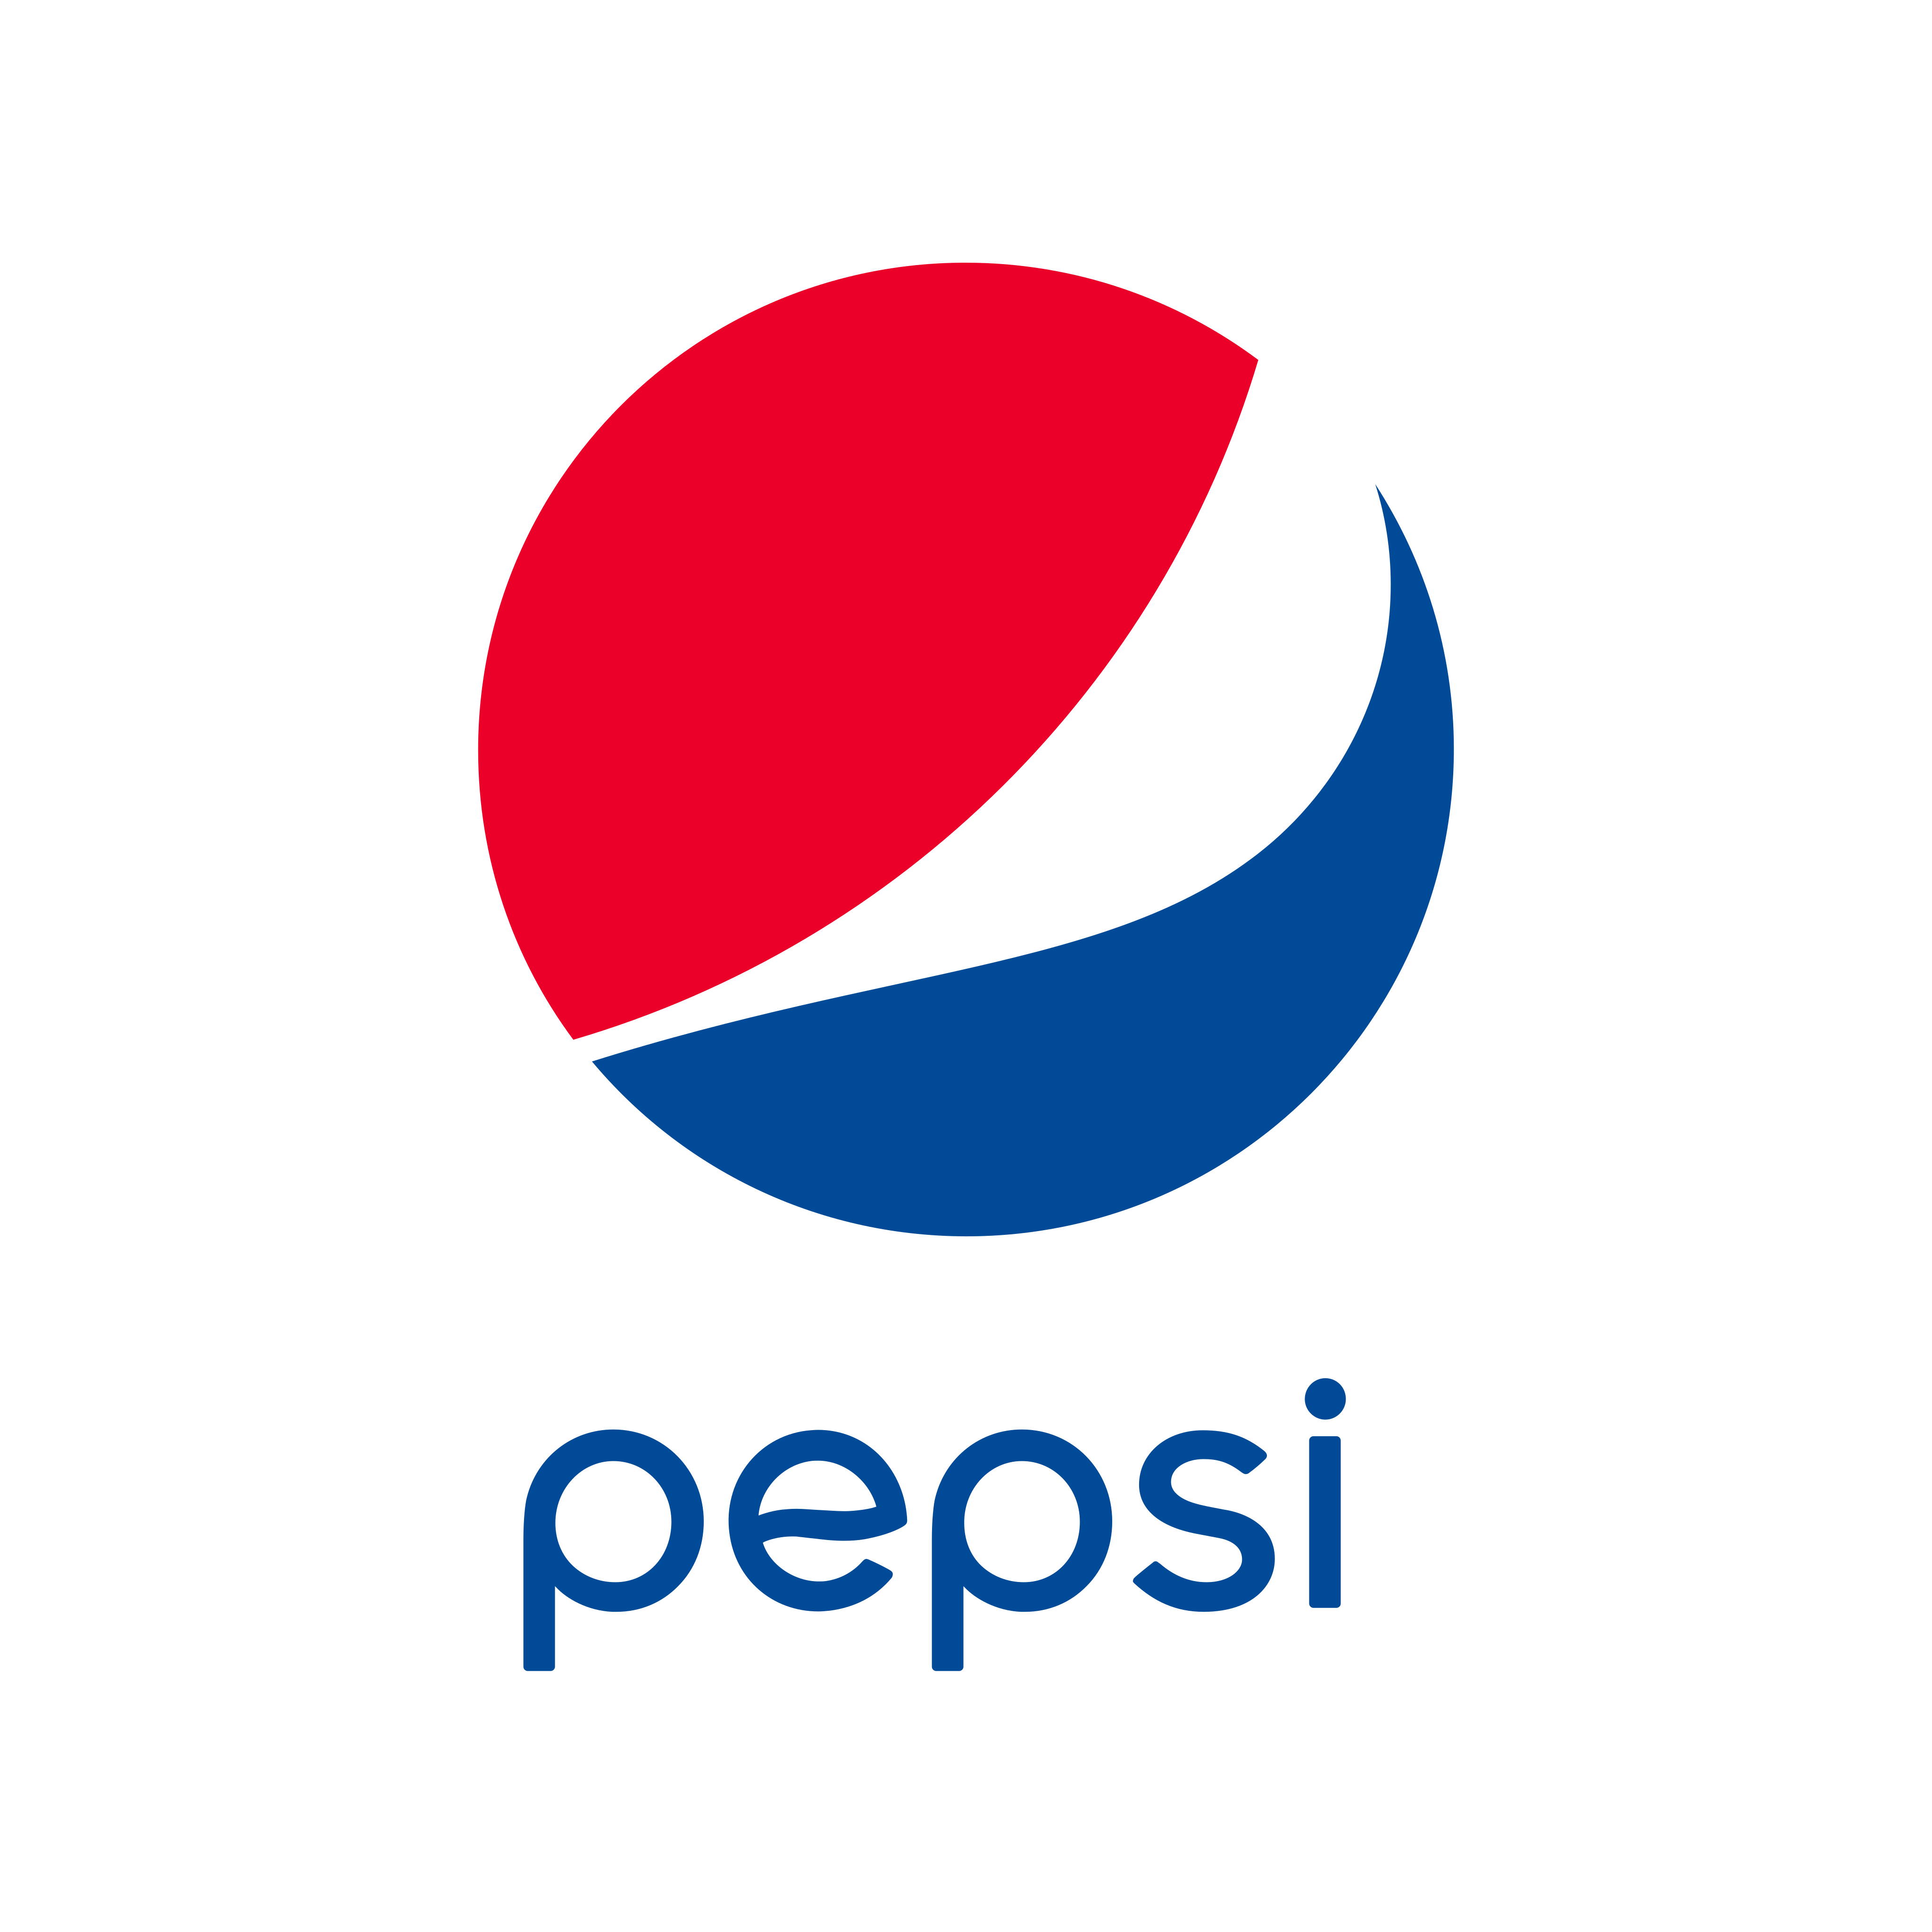 pepsi logo 0 - Pepsi Logo